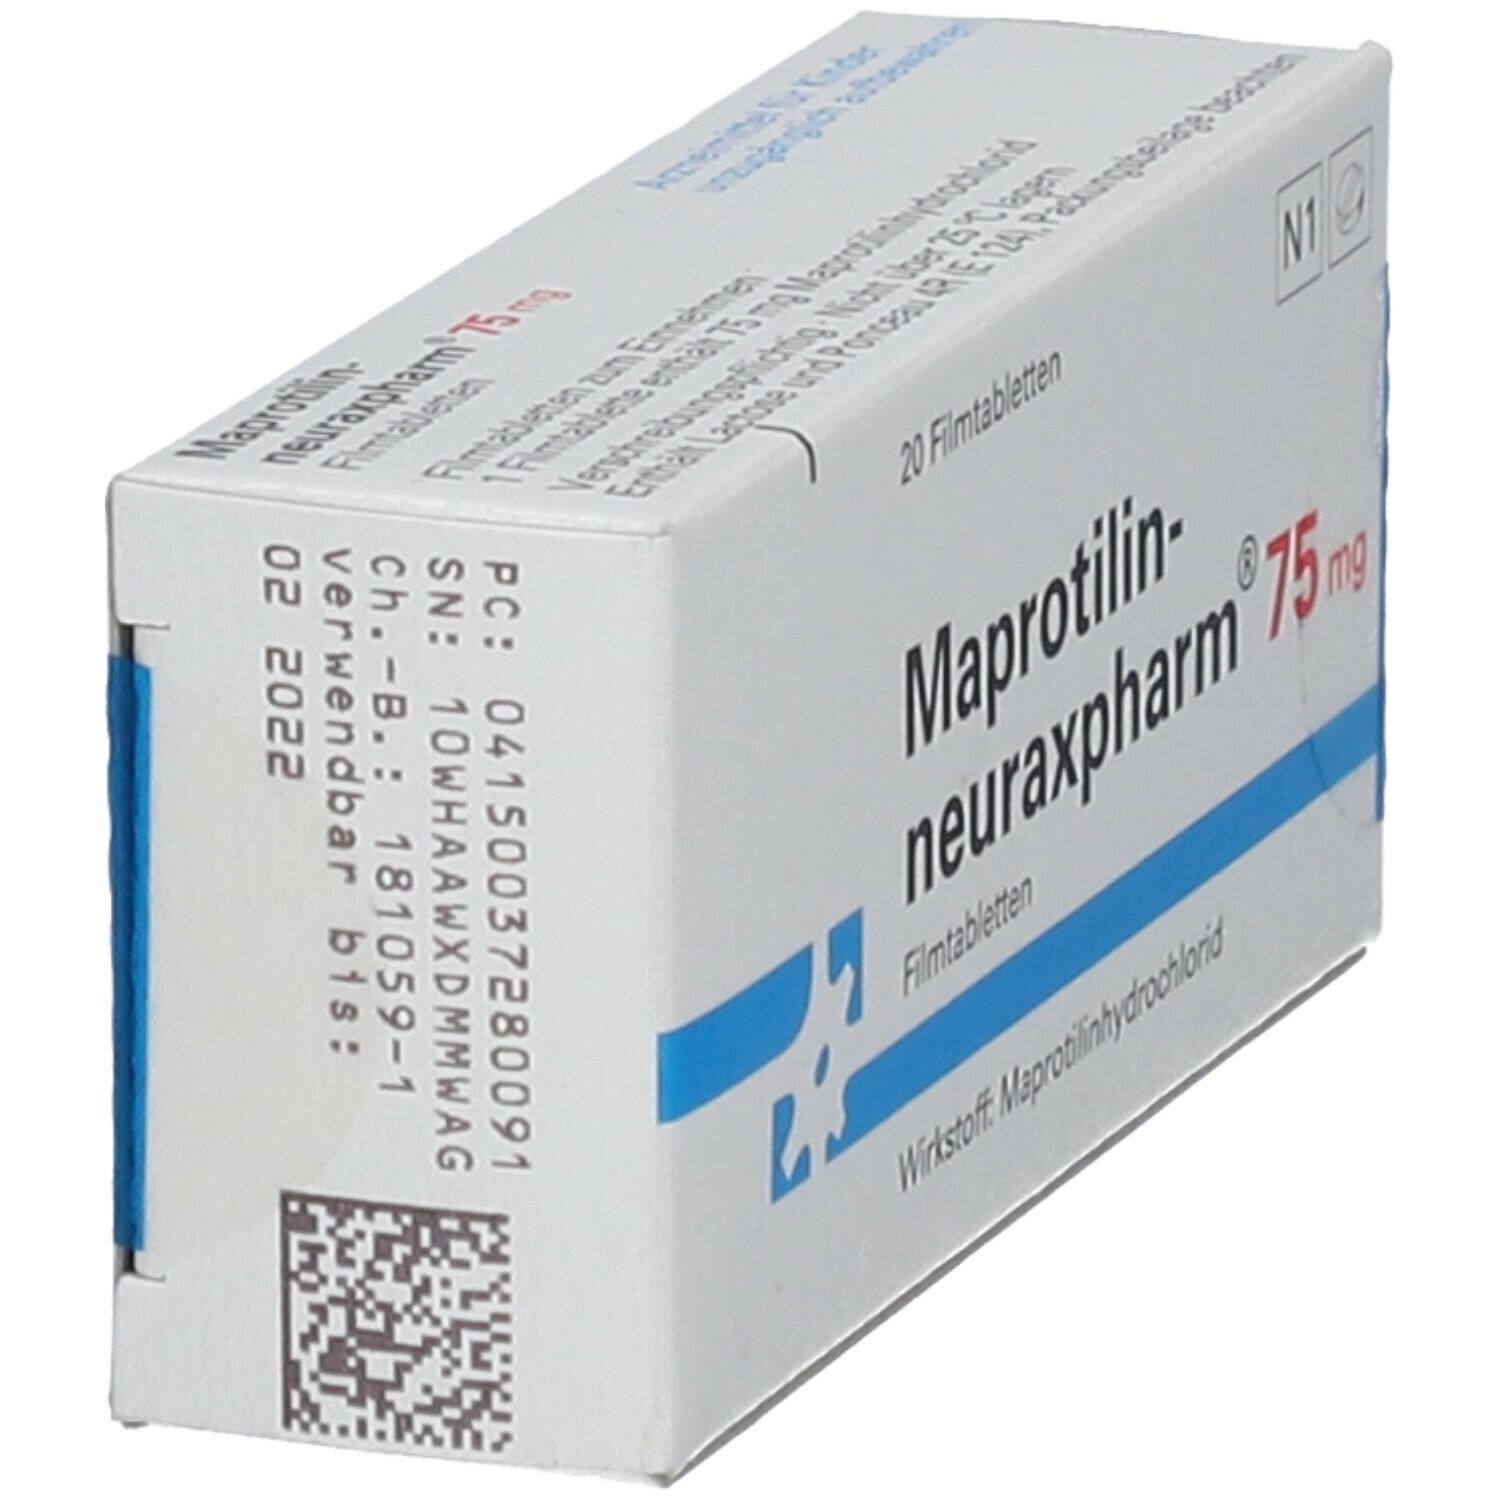 Maprotilin-neuraxpharm® 75 mg